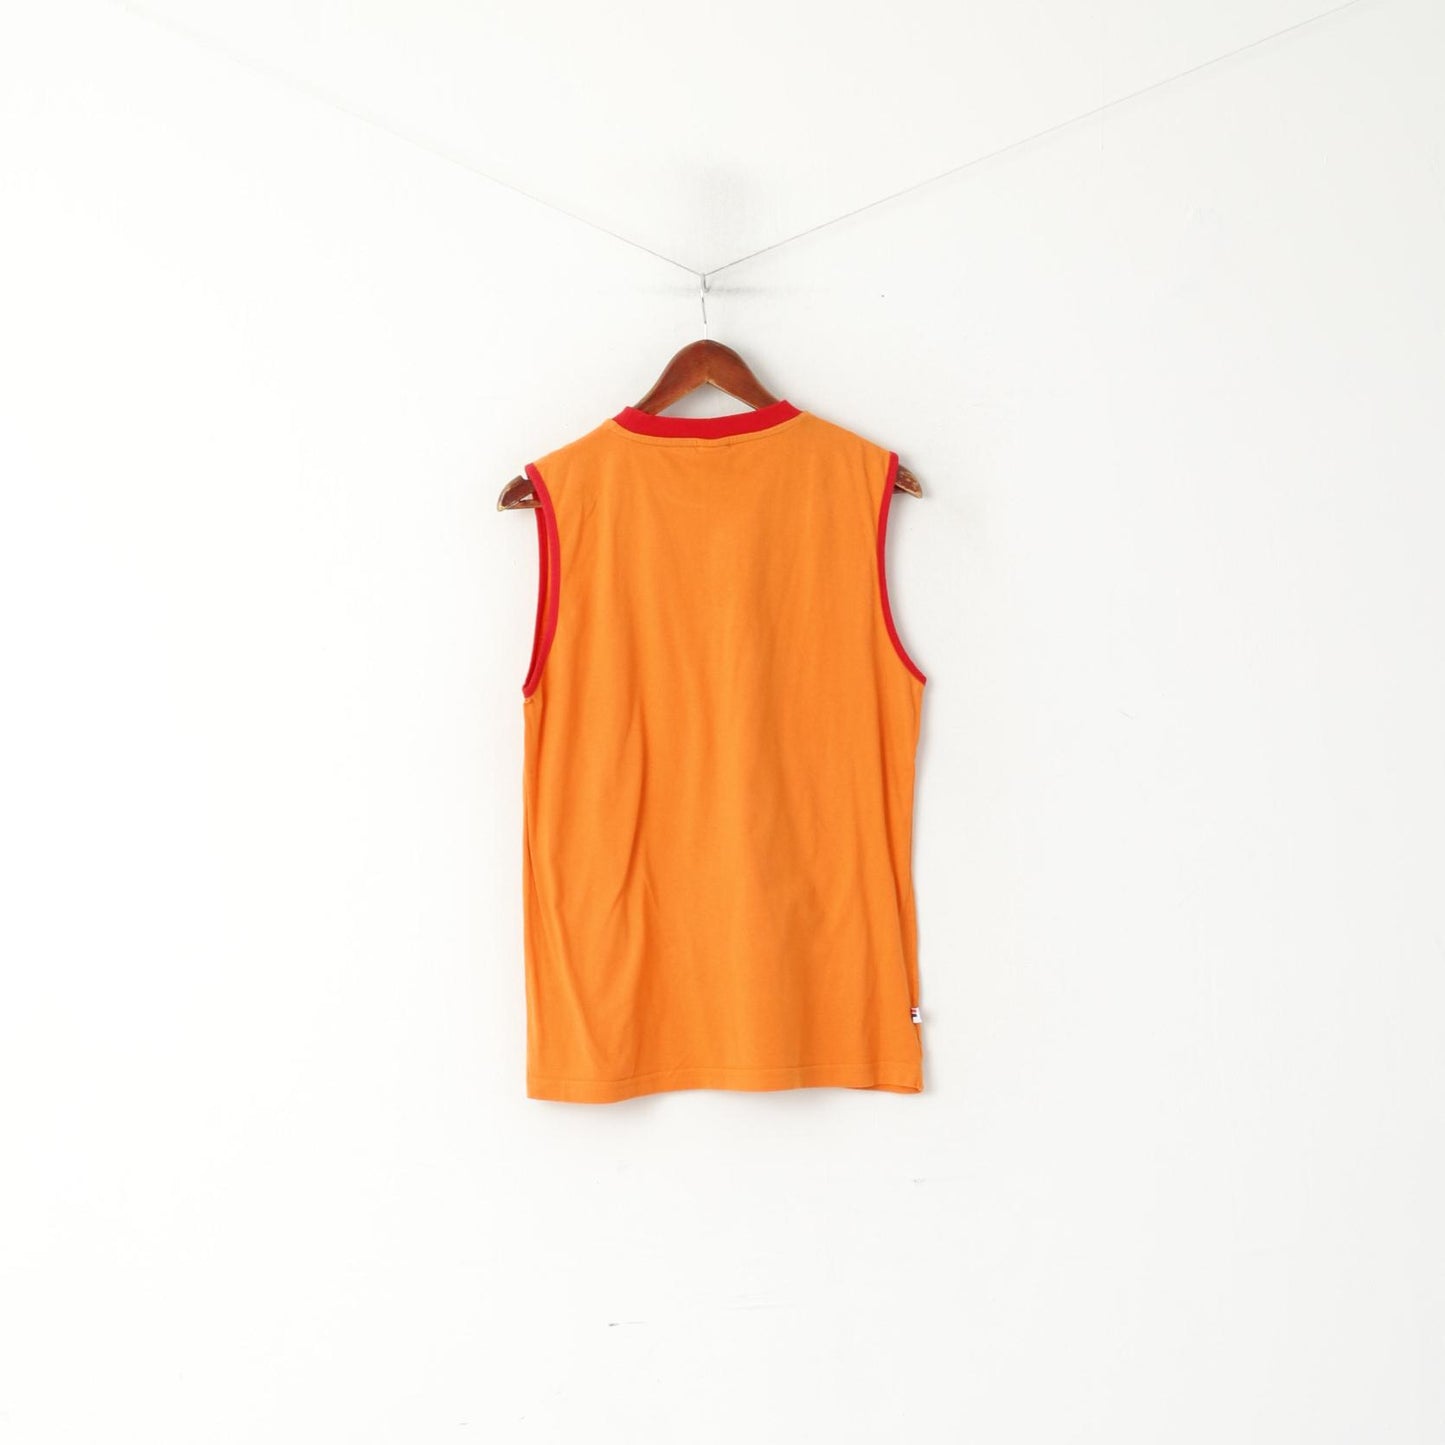 Fila Men 50 M Shirt Orange Cotton Vintage Logo Crew Neck Sleeveless Top